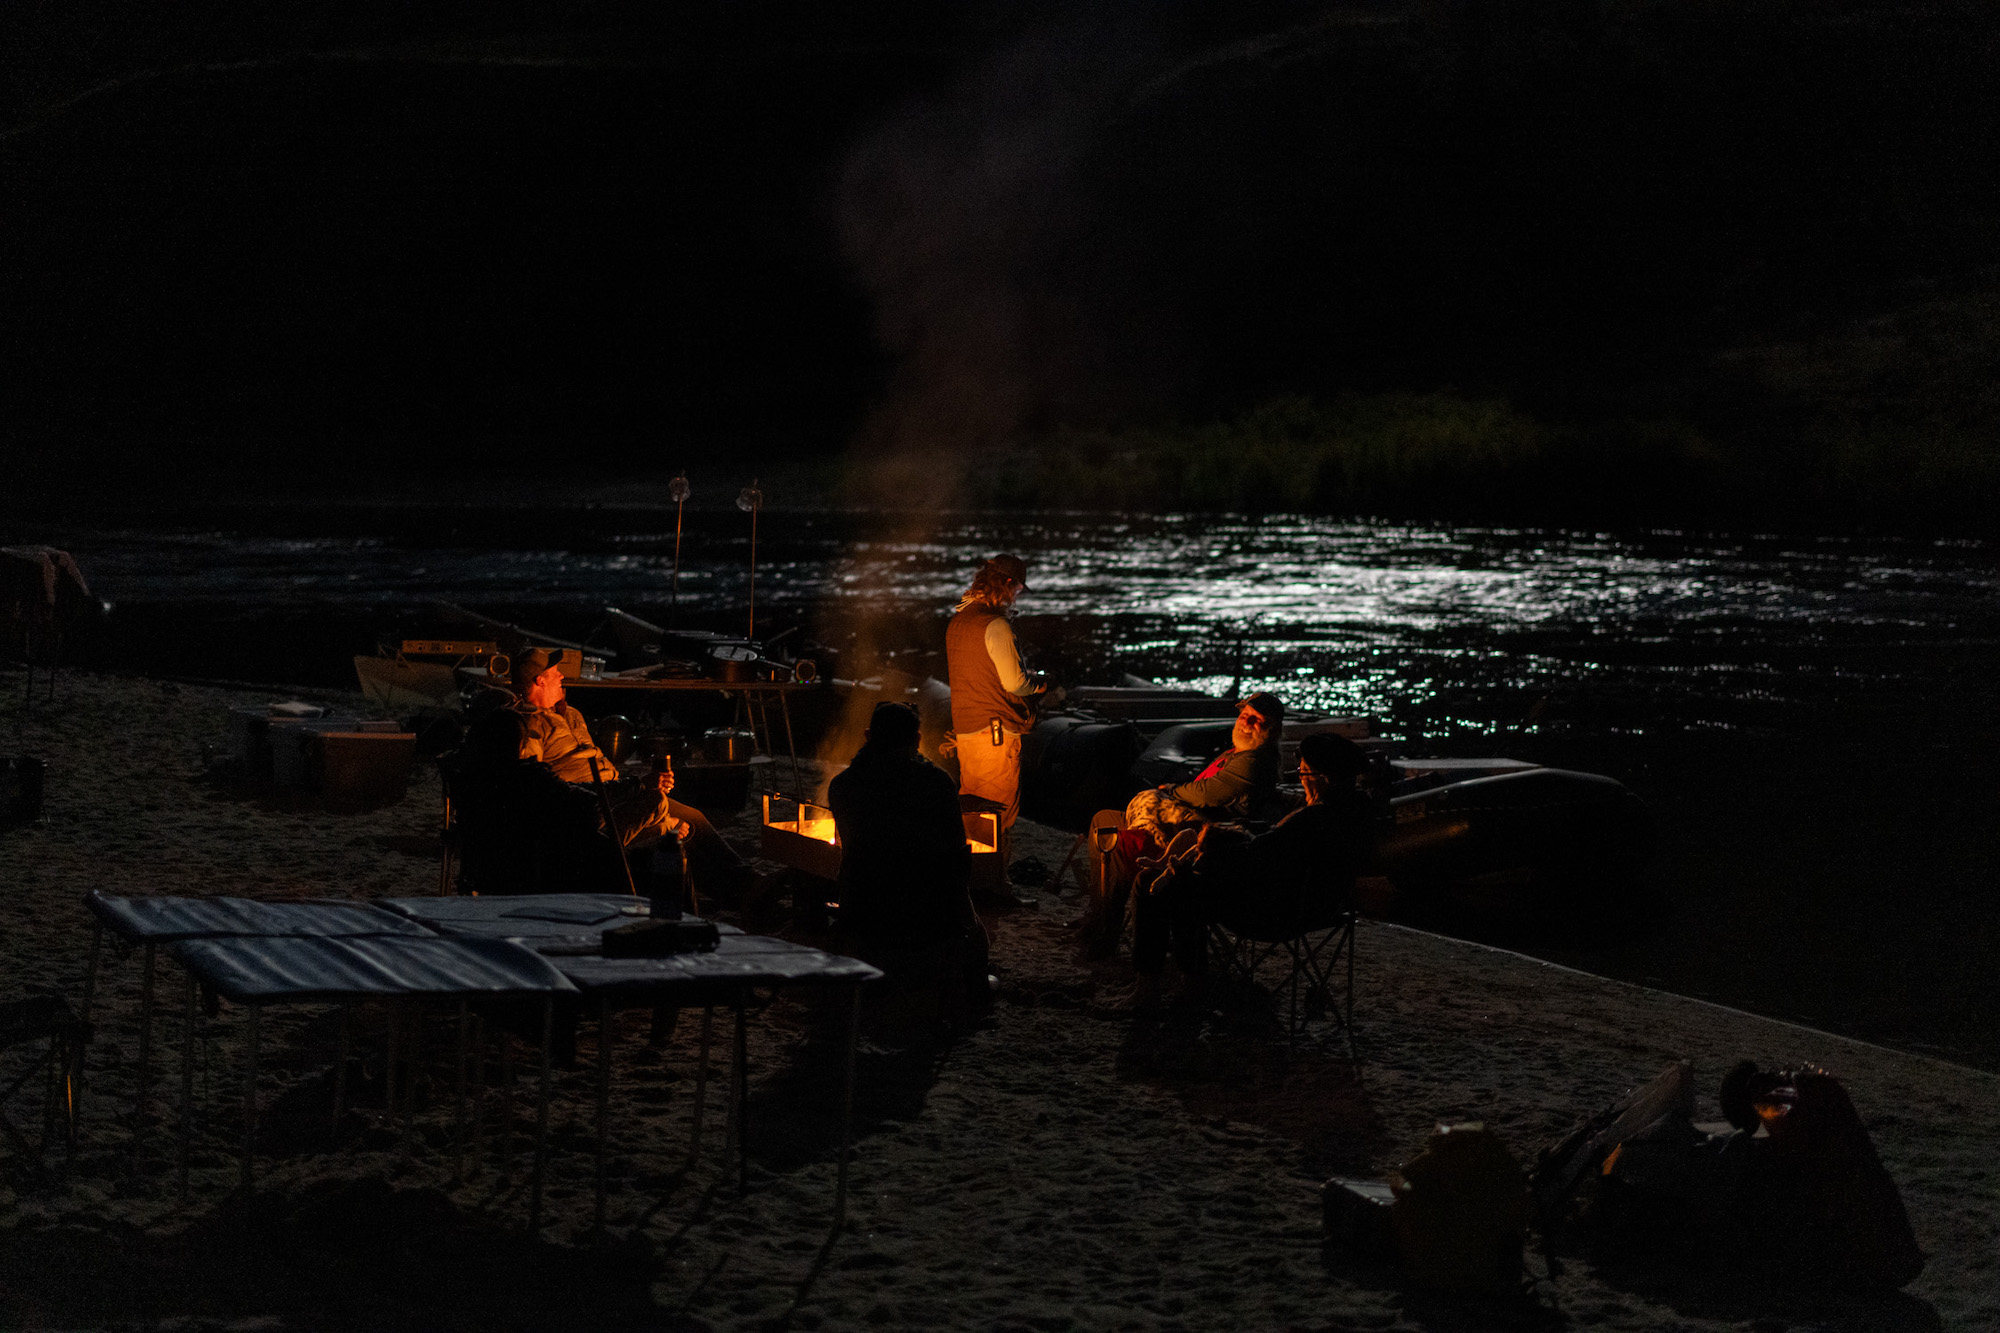 snake river dams feature night campsite